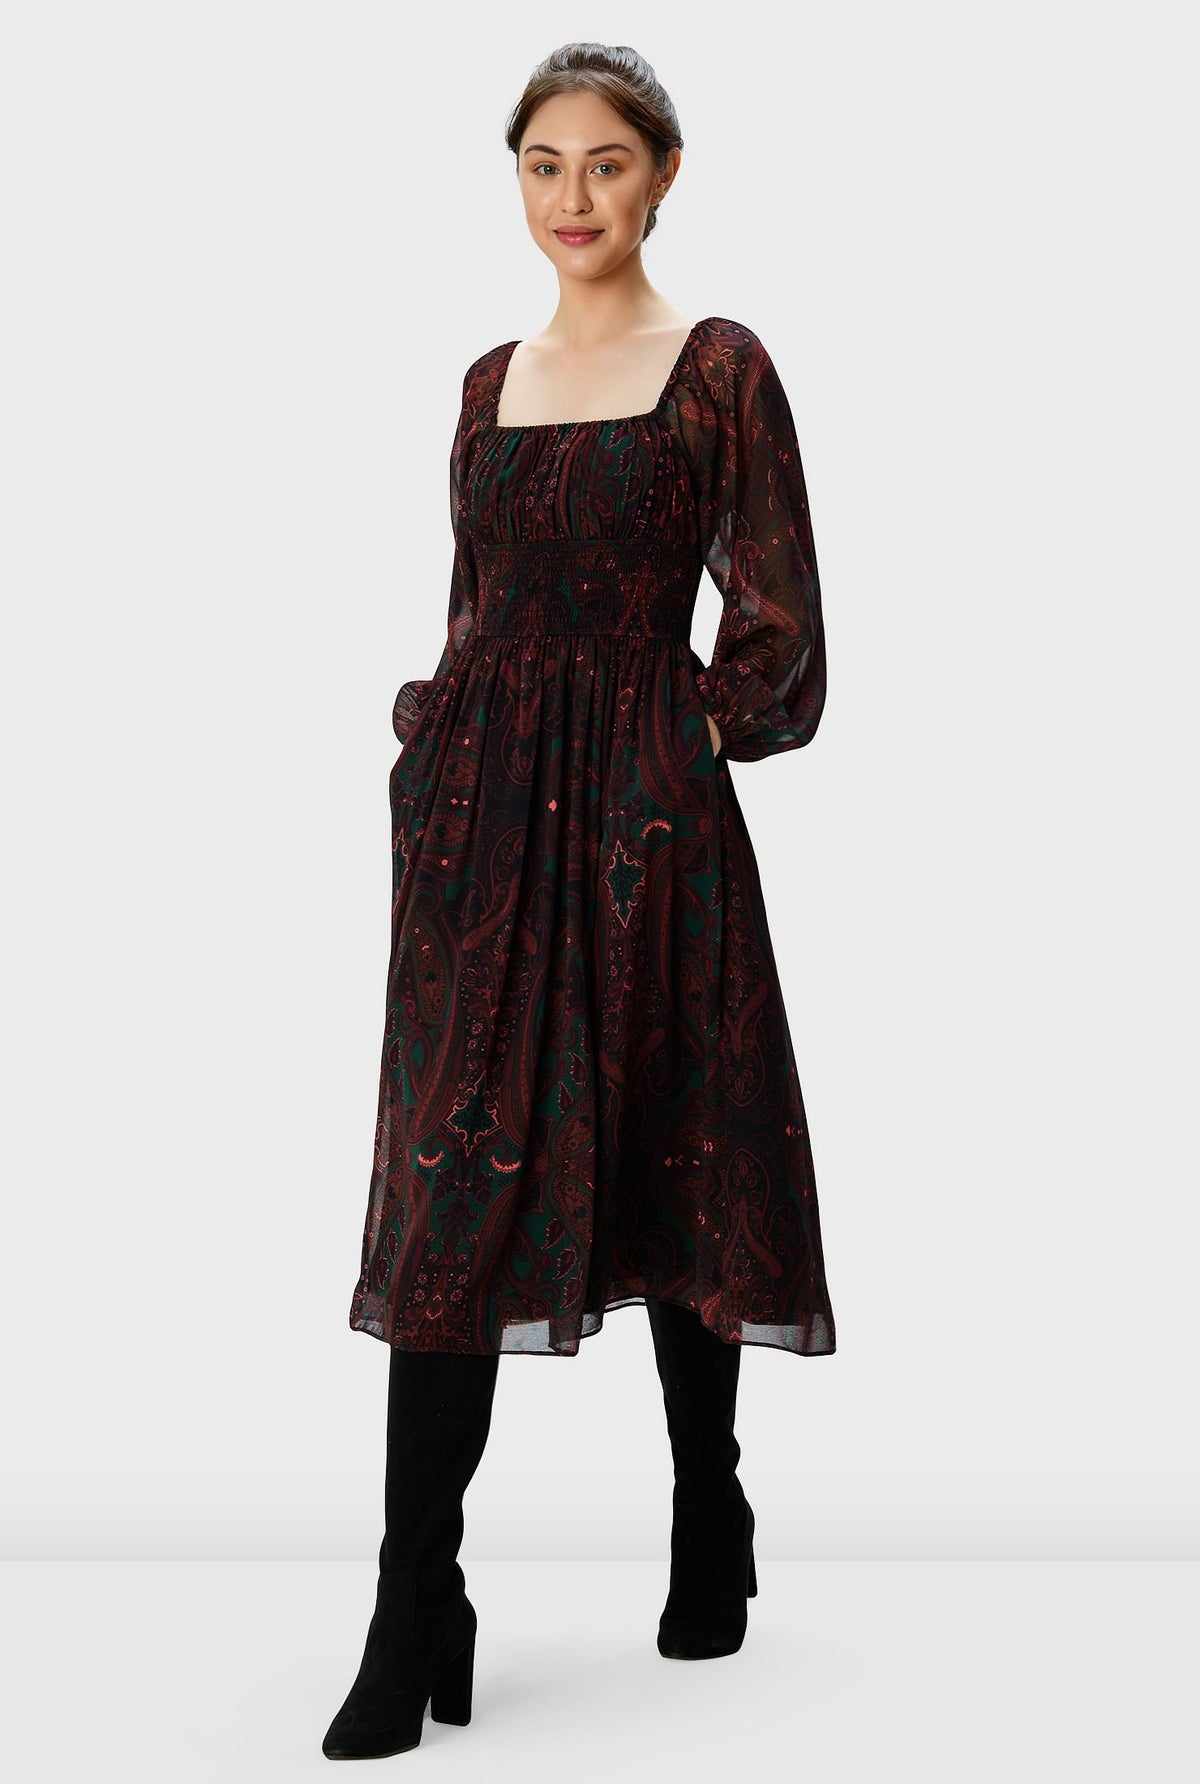 The Winifred Dress